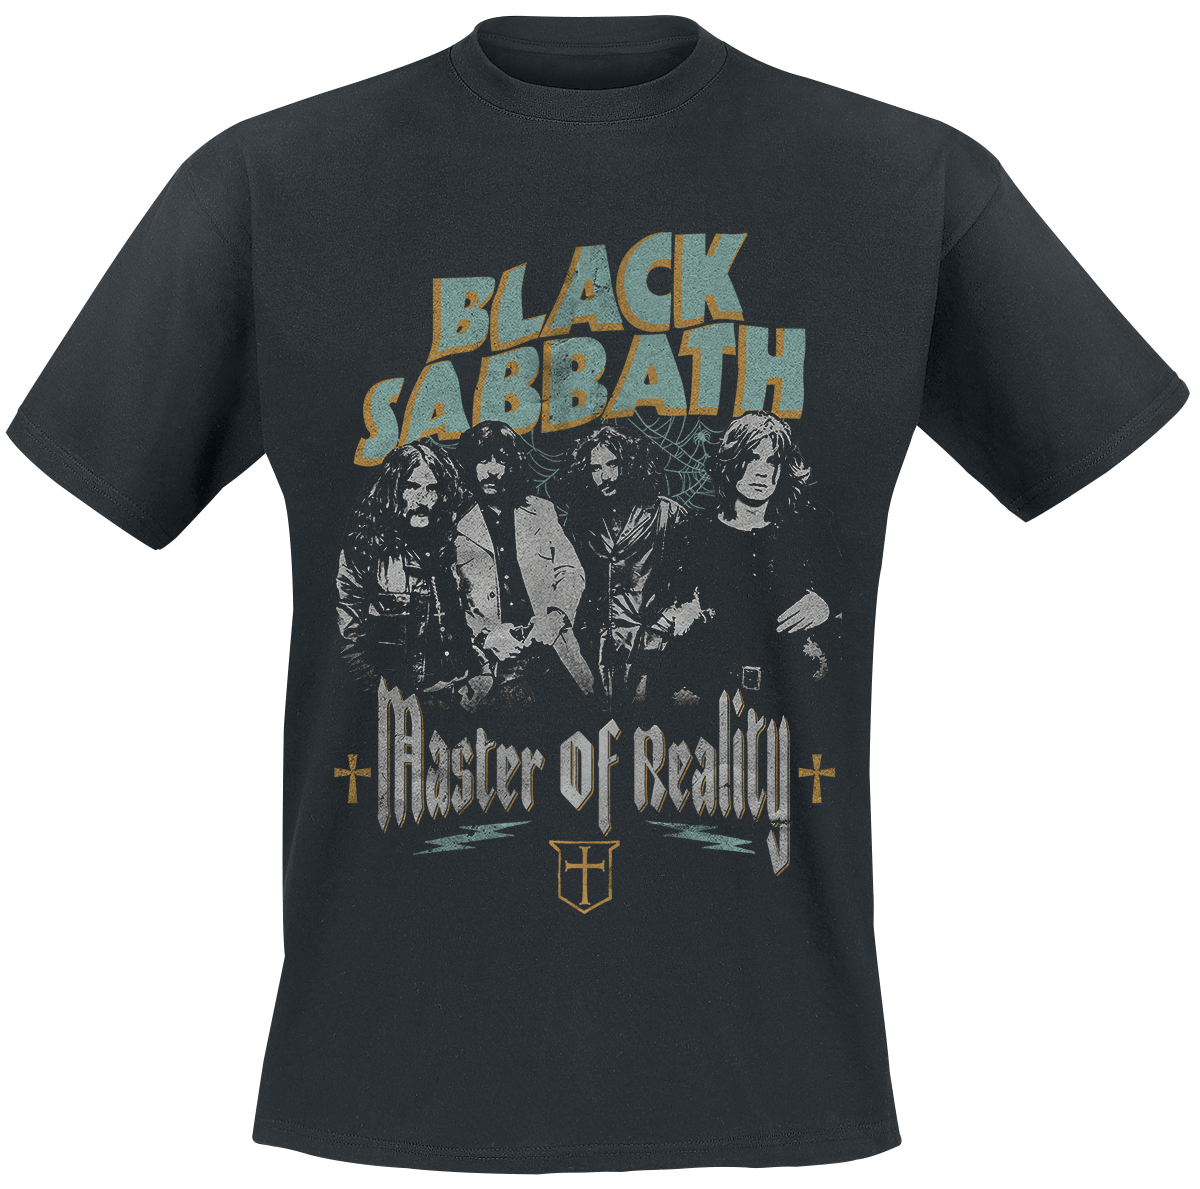 Black Sabbath - Master of reality - T-Shirt - schwarz